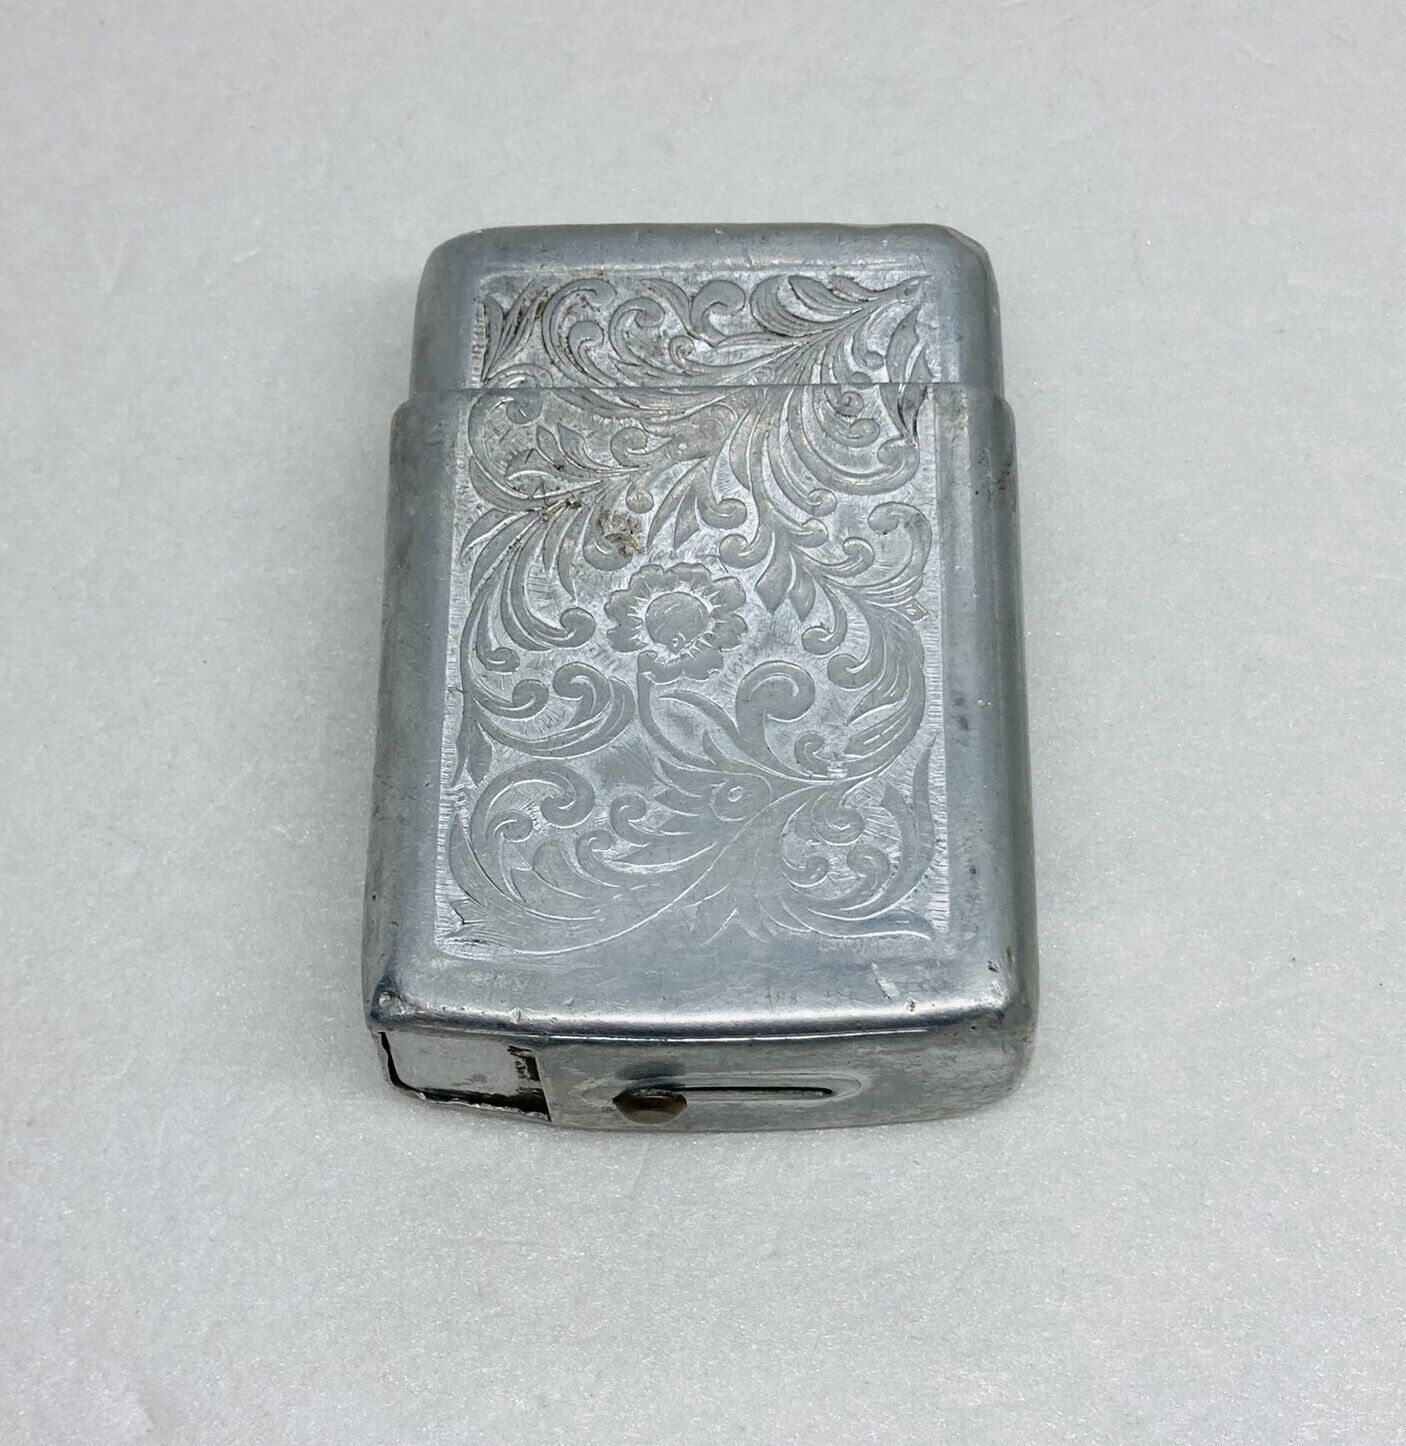 Vintage 1950s Park Industries Aluminum Cigarette Case Protective Holder USA 20